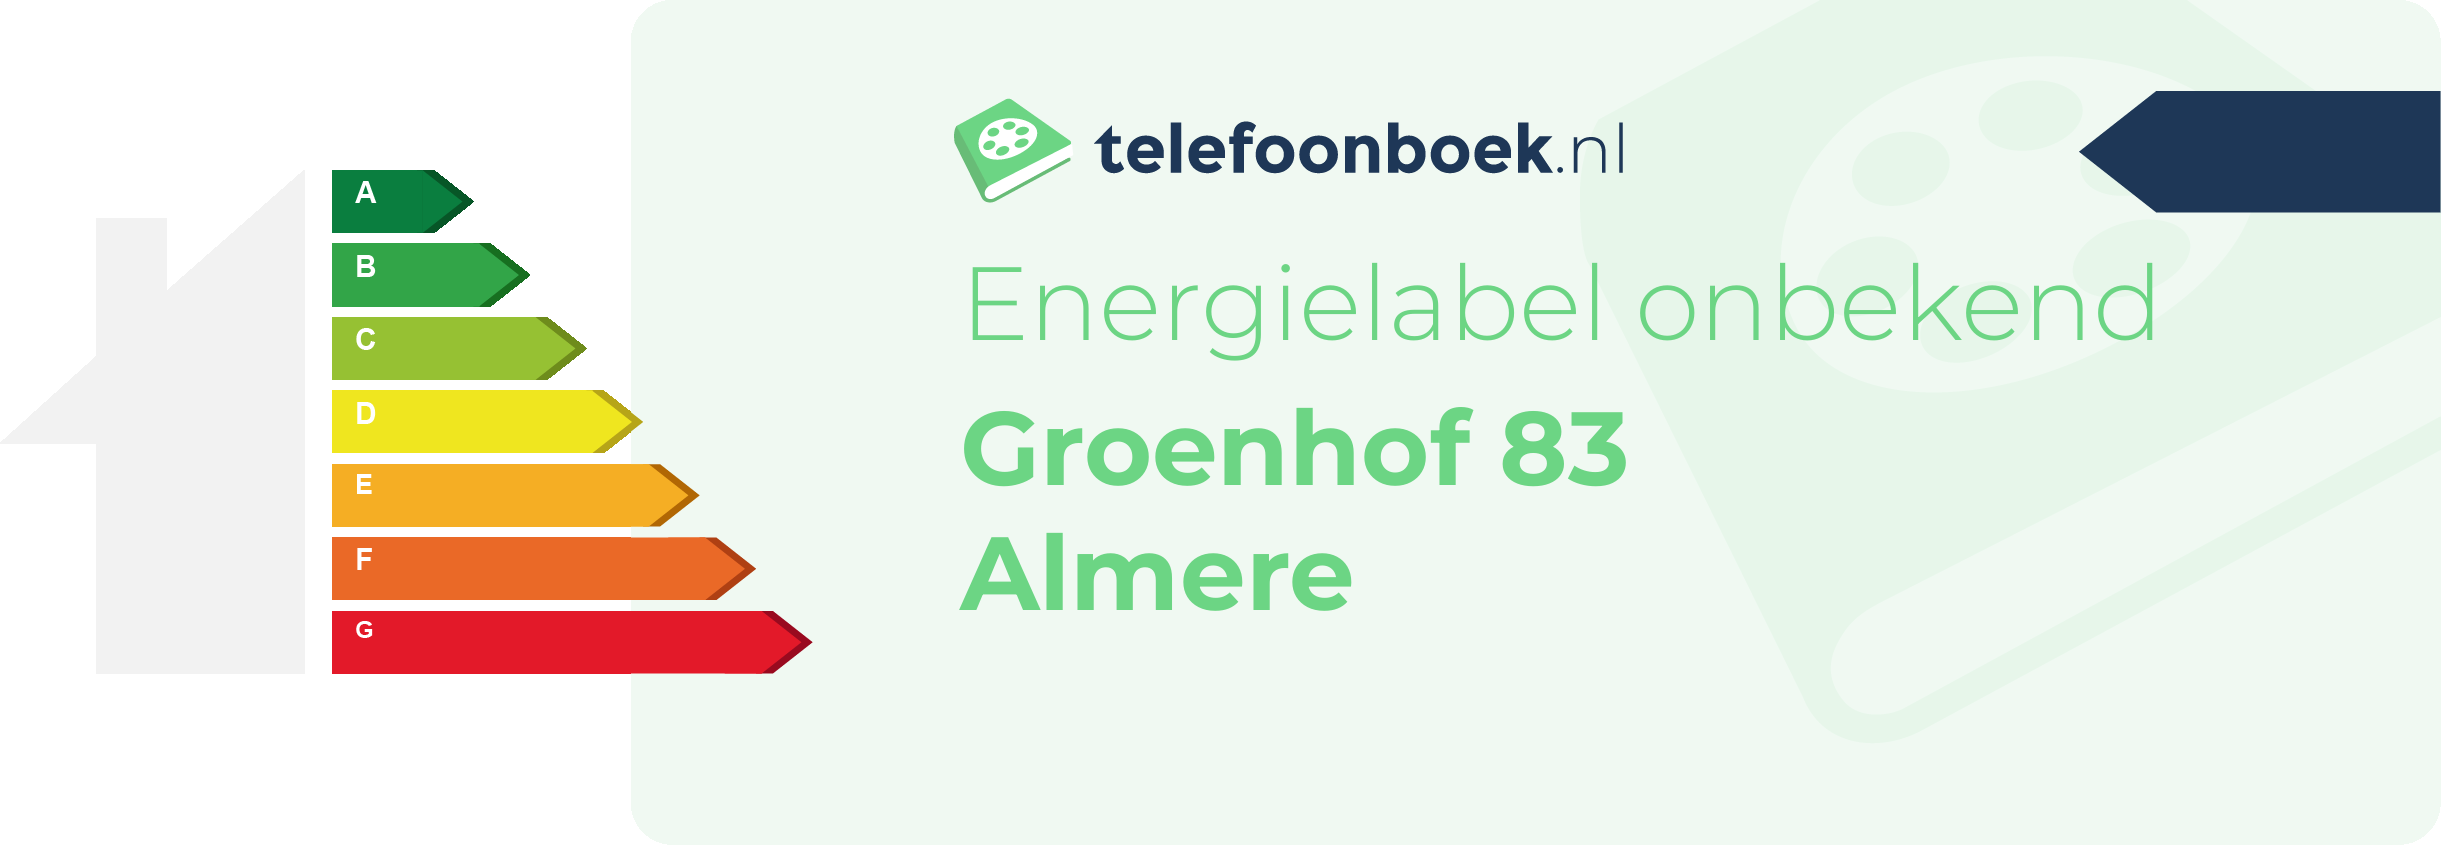 Energielabel Groenhof 83 Almere